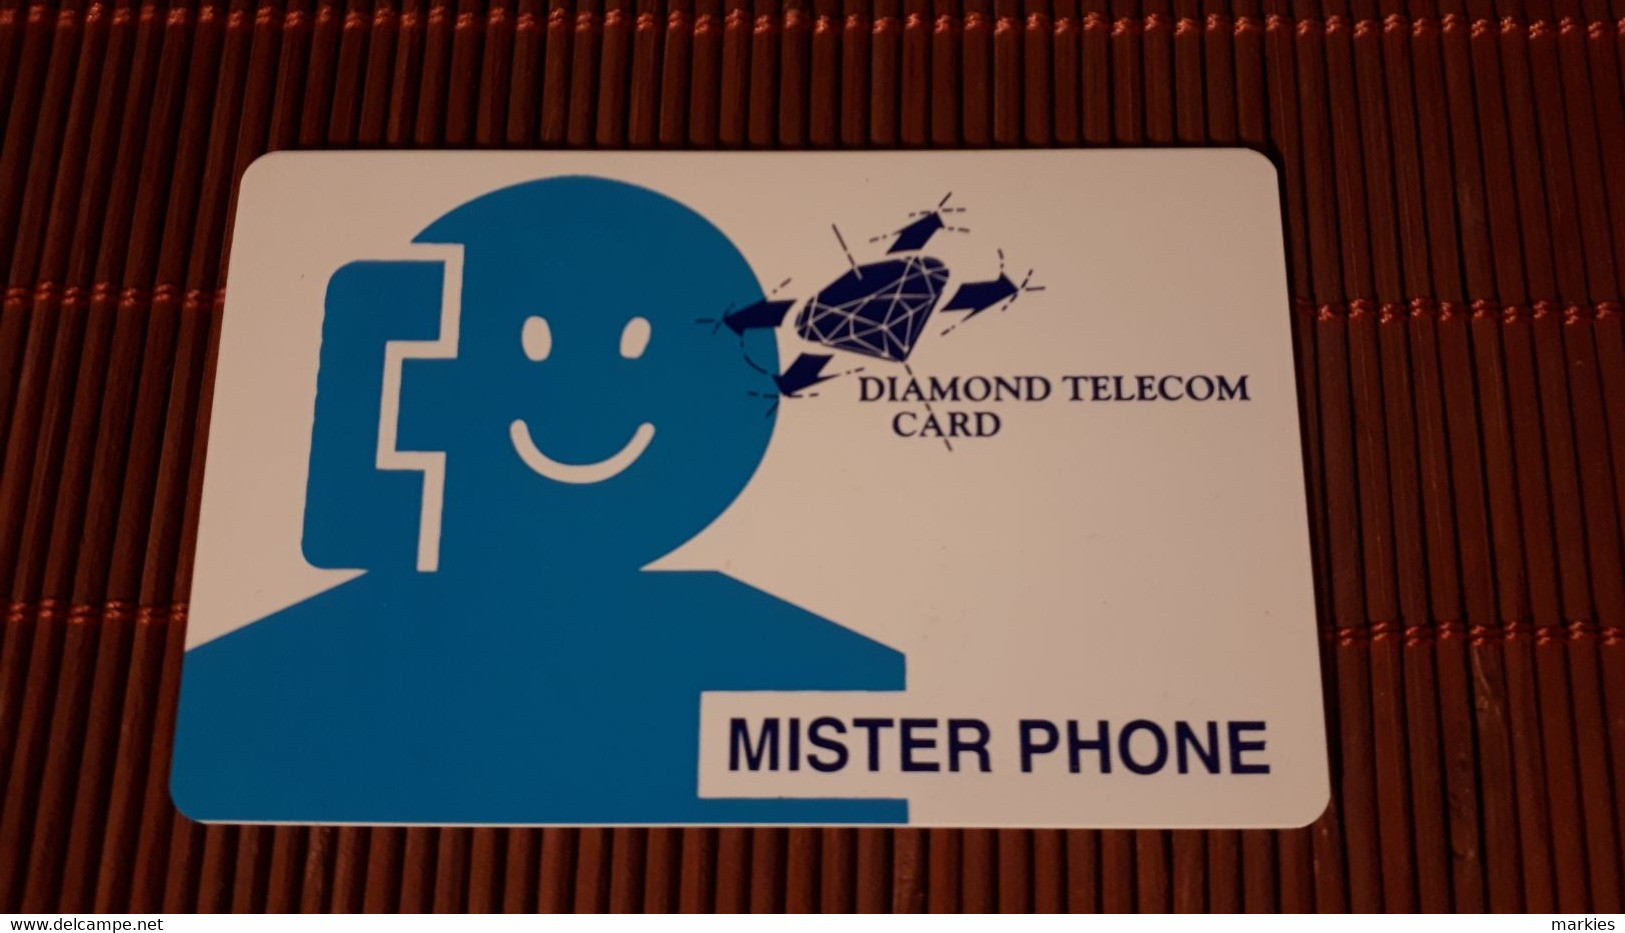 Diamond Telecom 1 Prepaidcard Mister Phone (Mint,New) Expiry Dat 31-1-97  Rare - Origine Inconnue